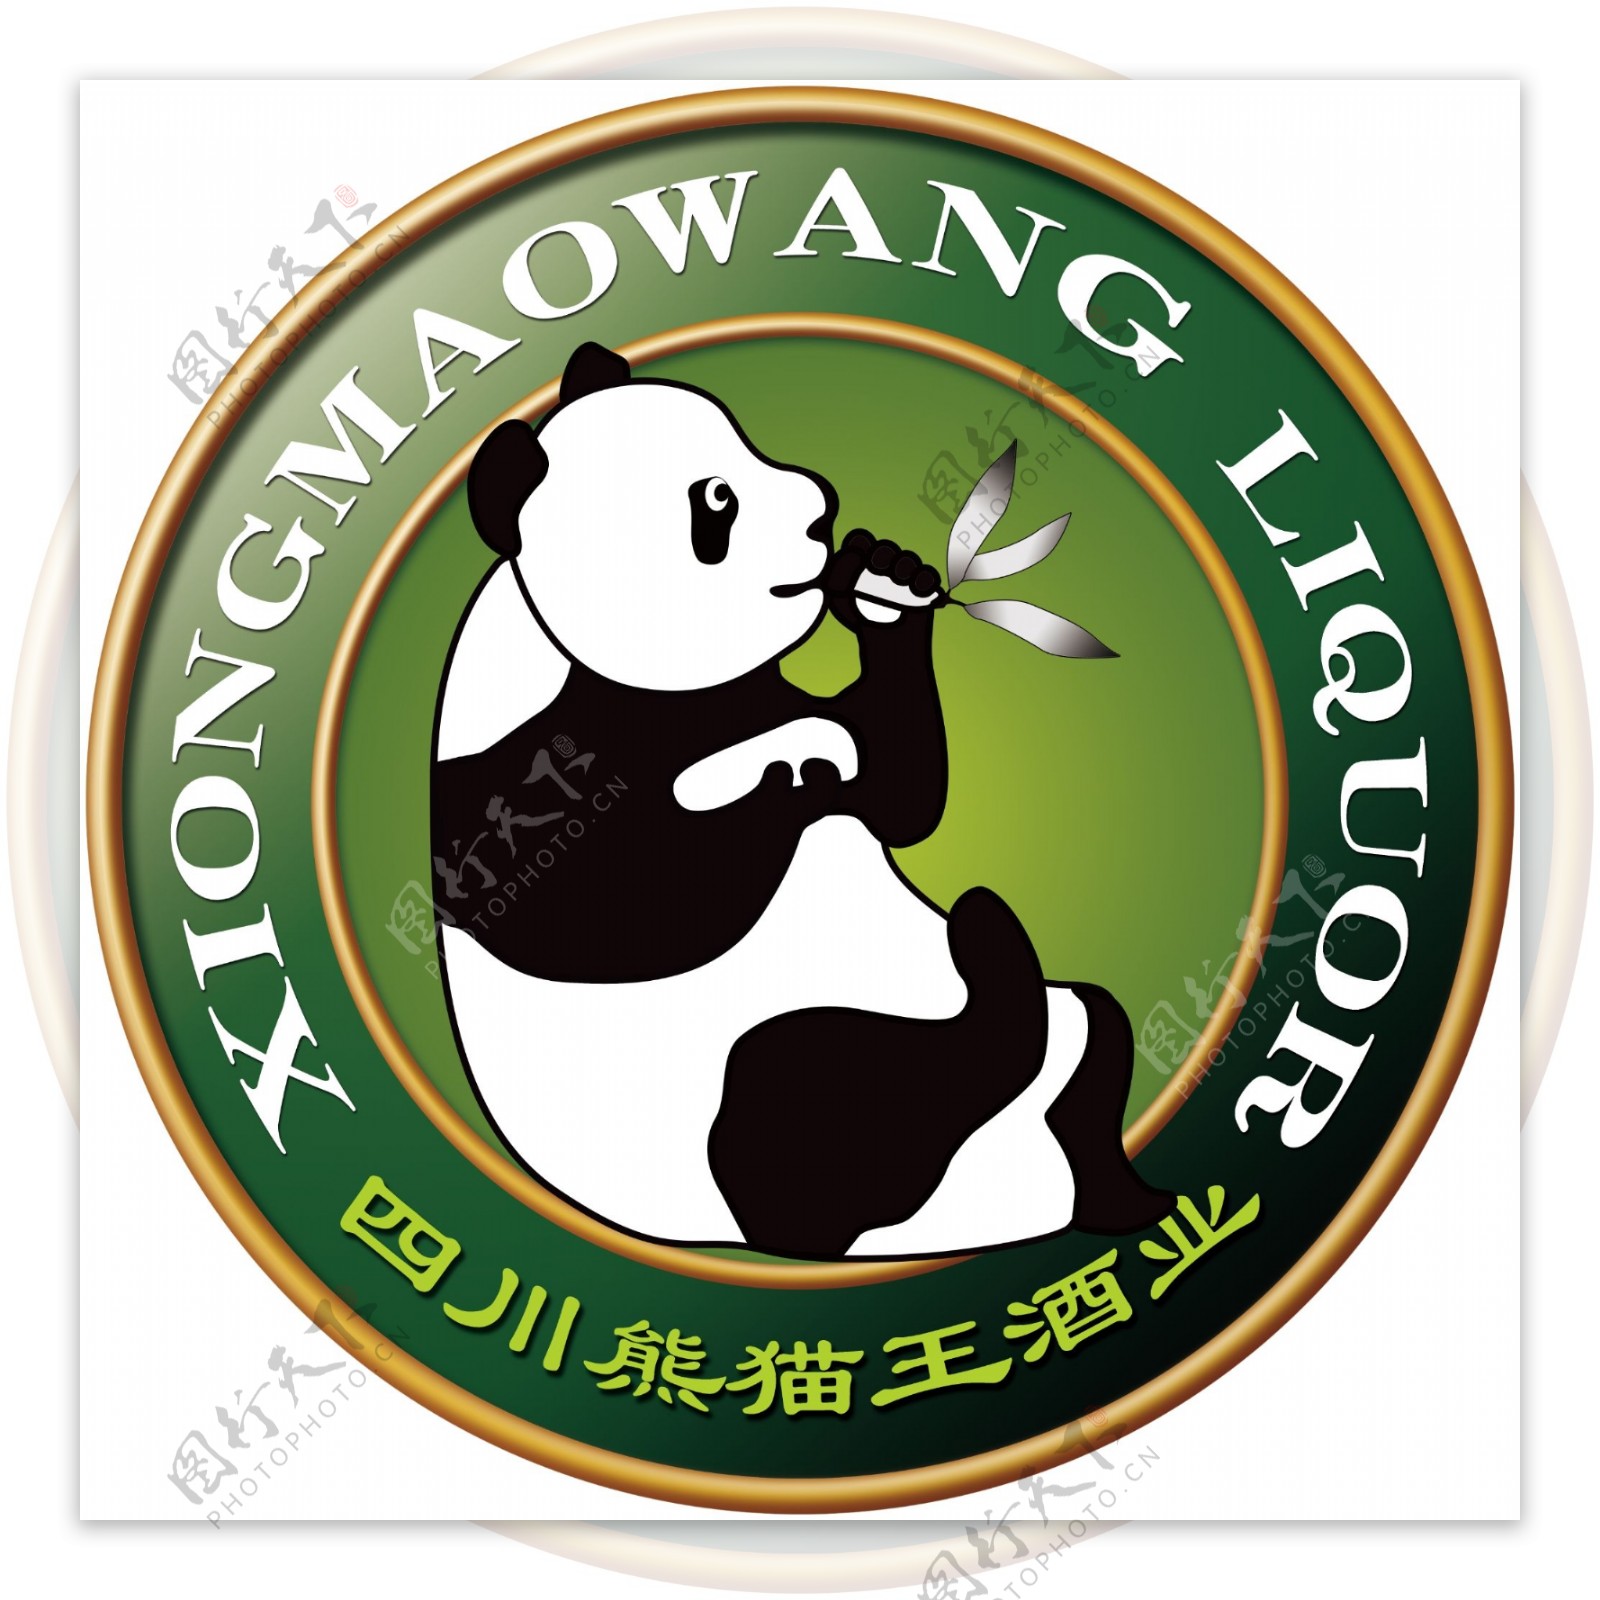 熊猫王酒logo